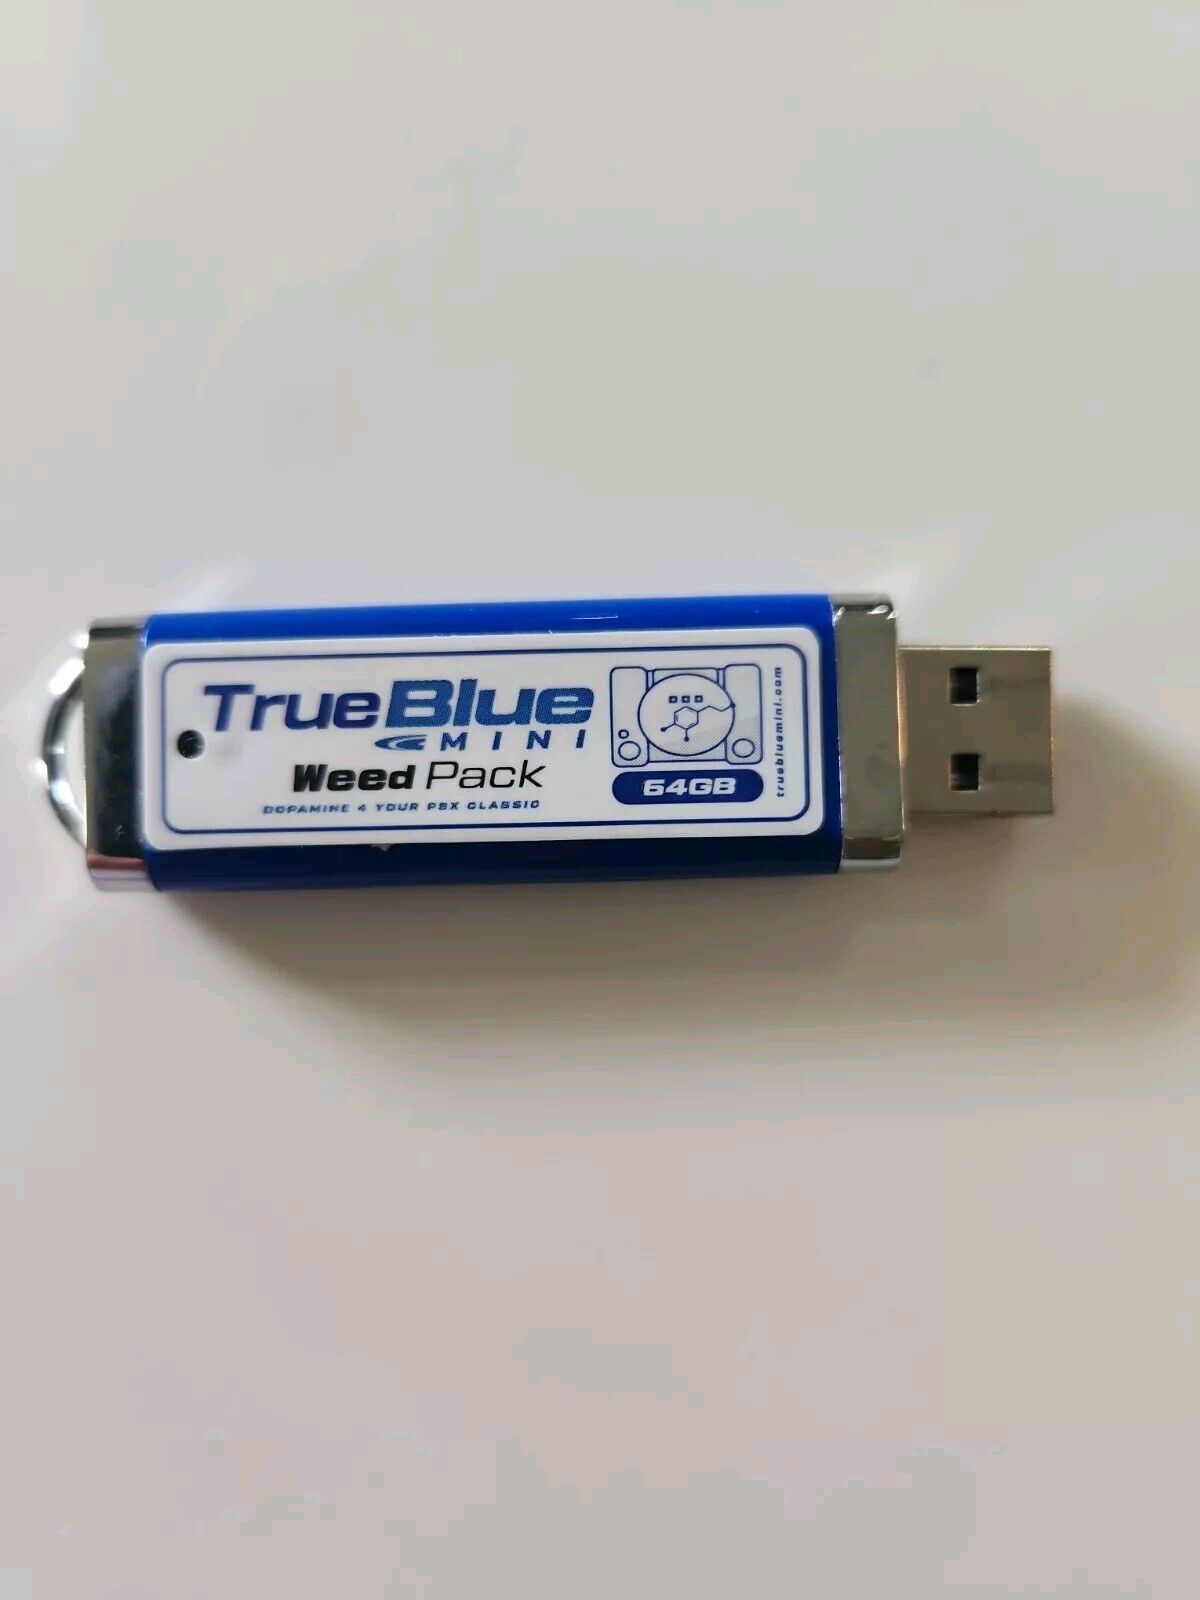 Original True Blue Mini -Weed Pack